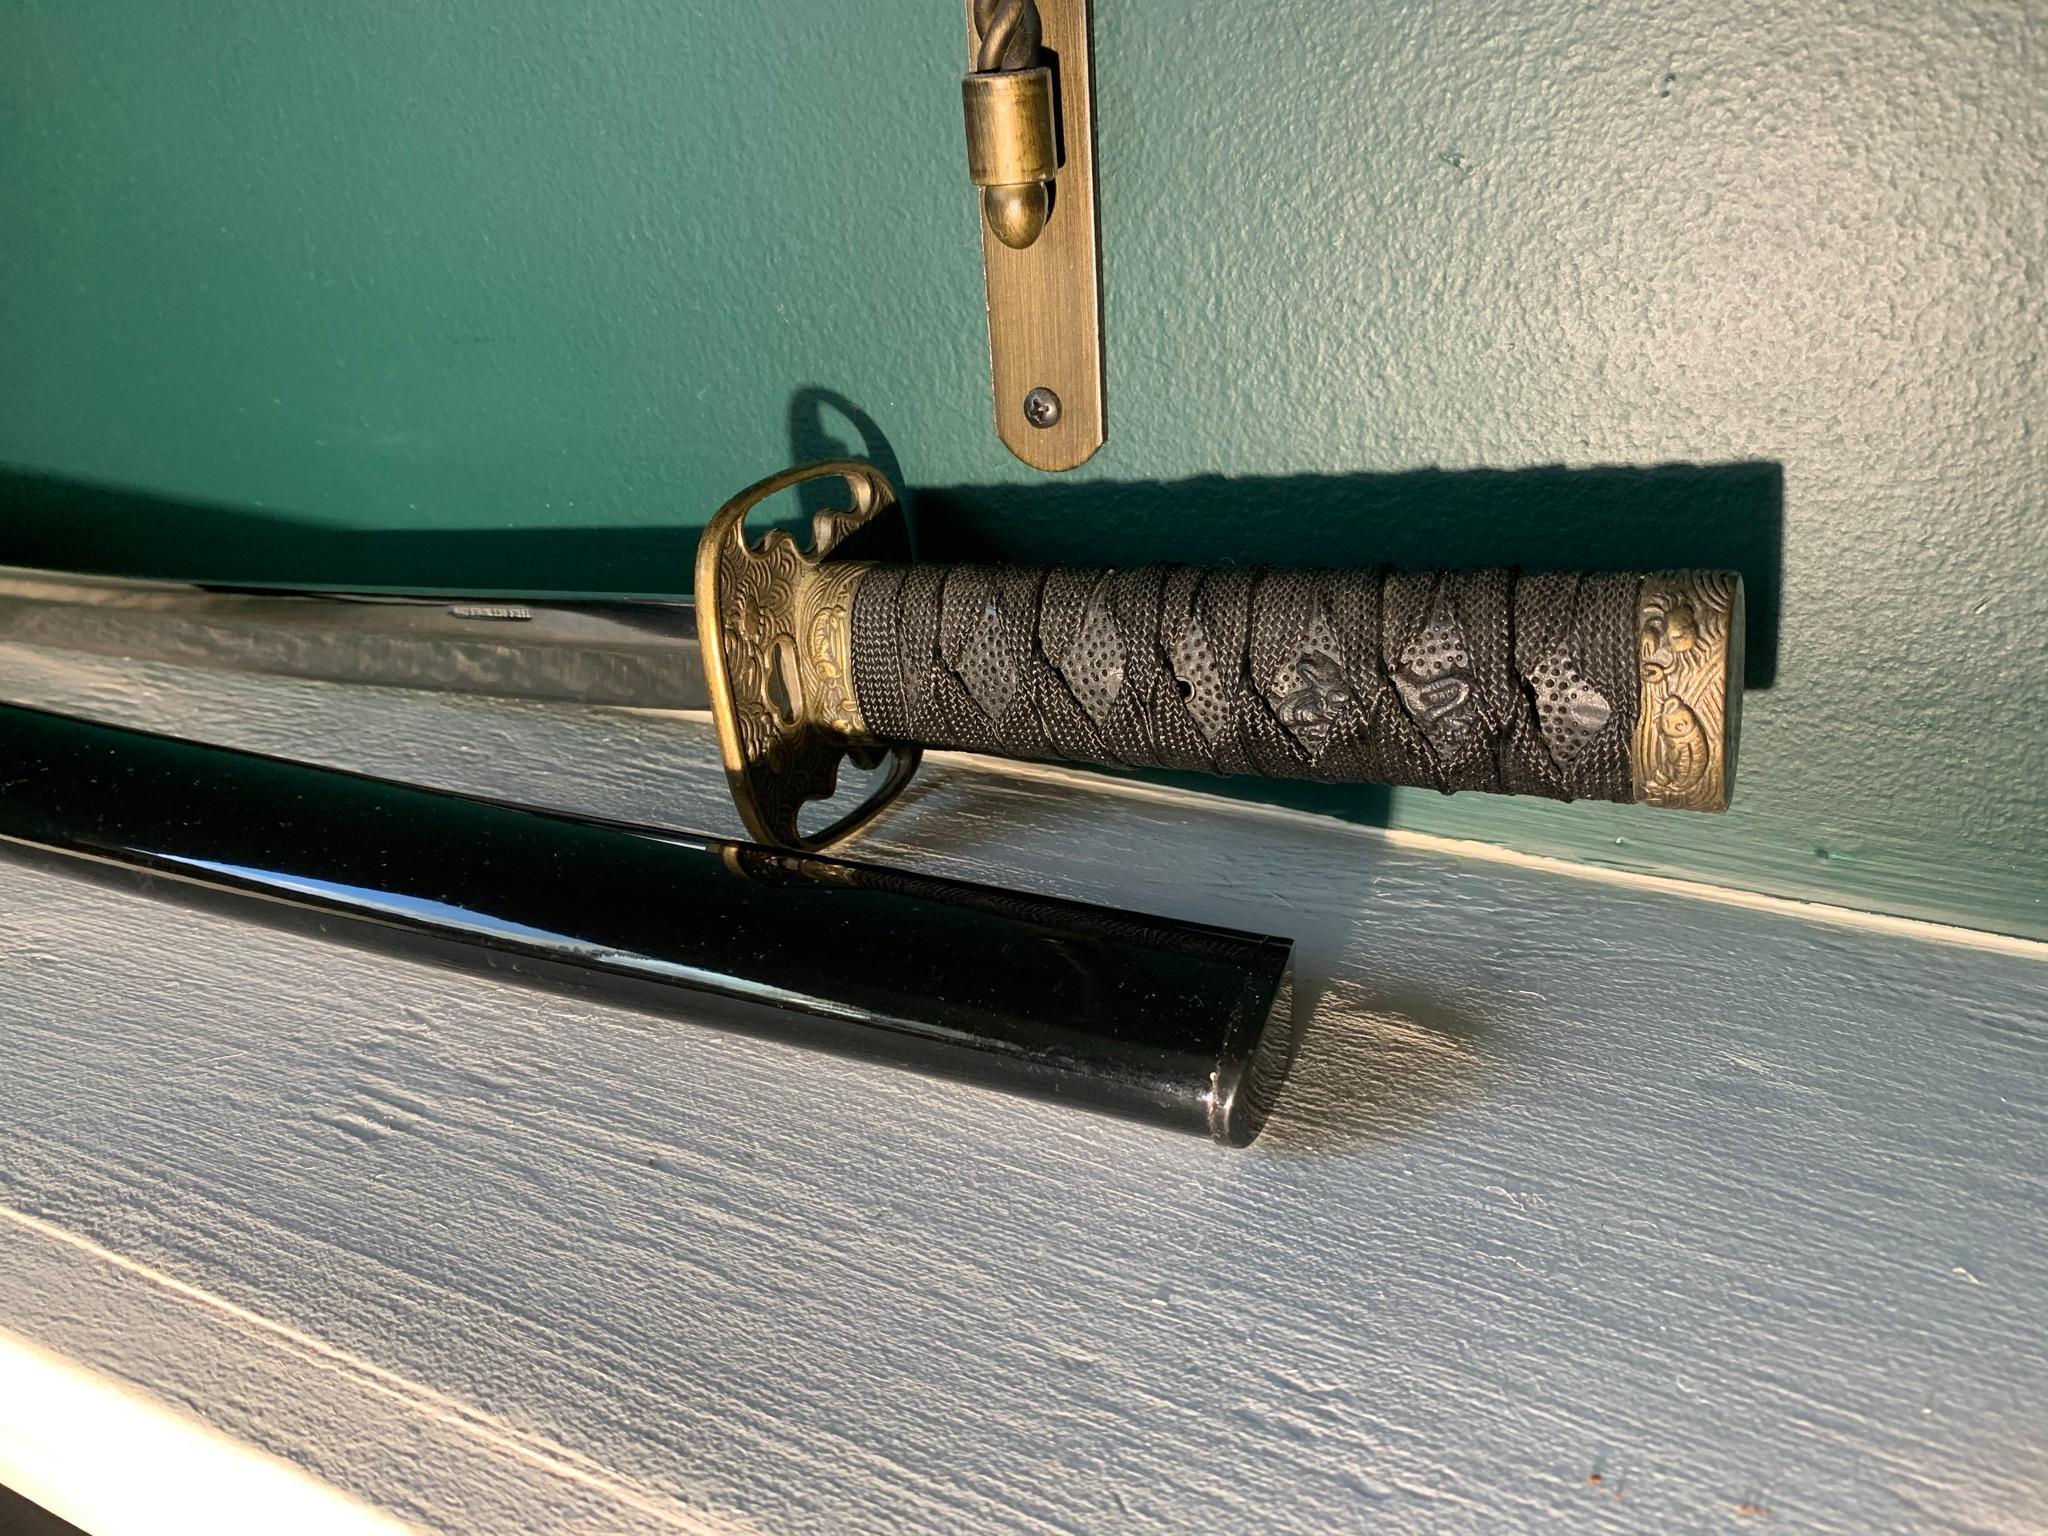 Decorative Samurai Sword in Scabbard - 25" long